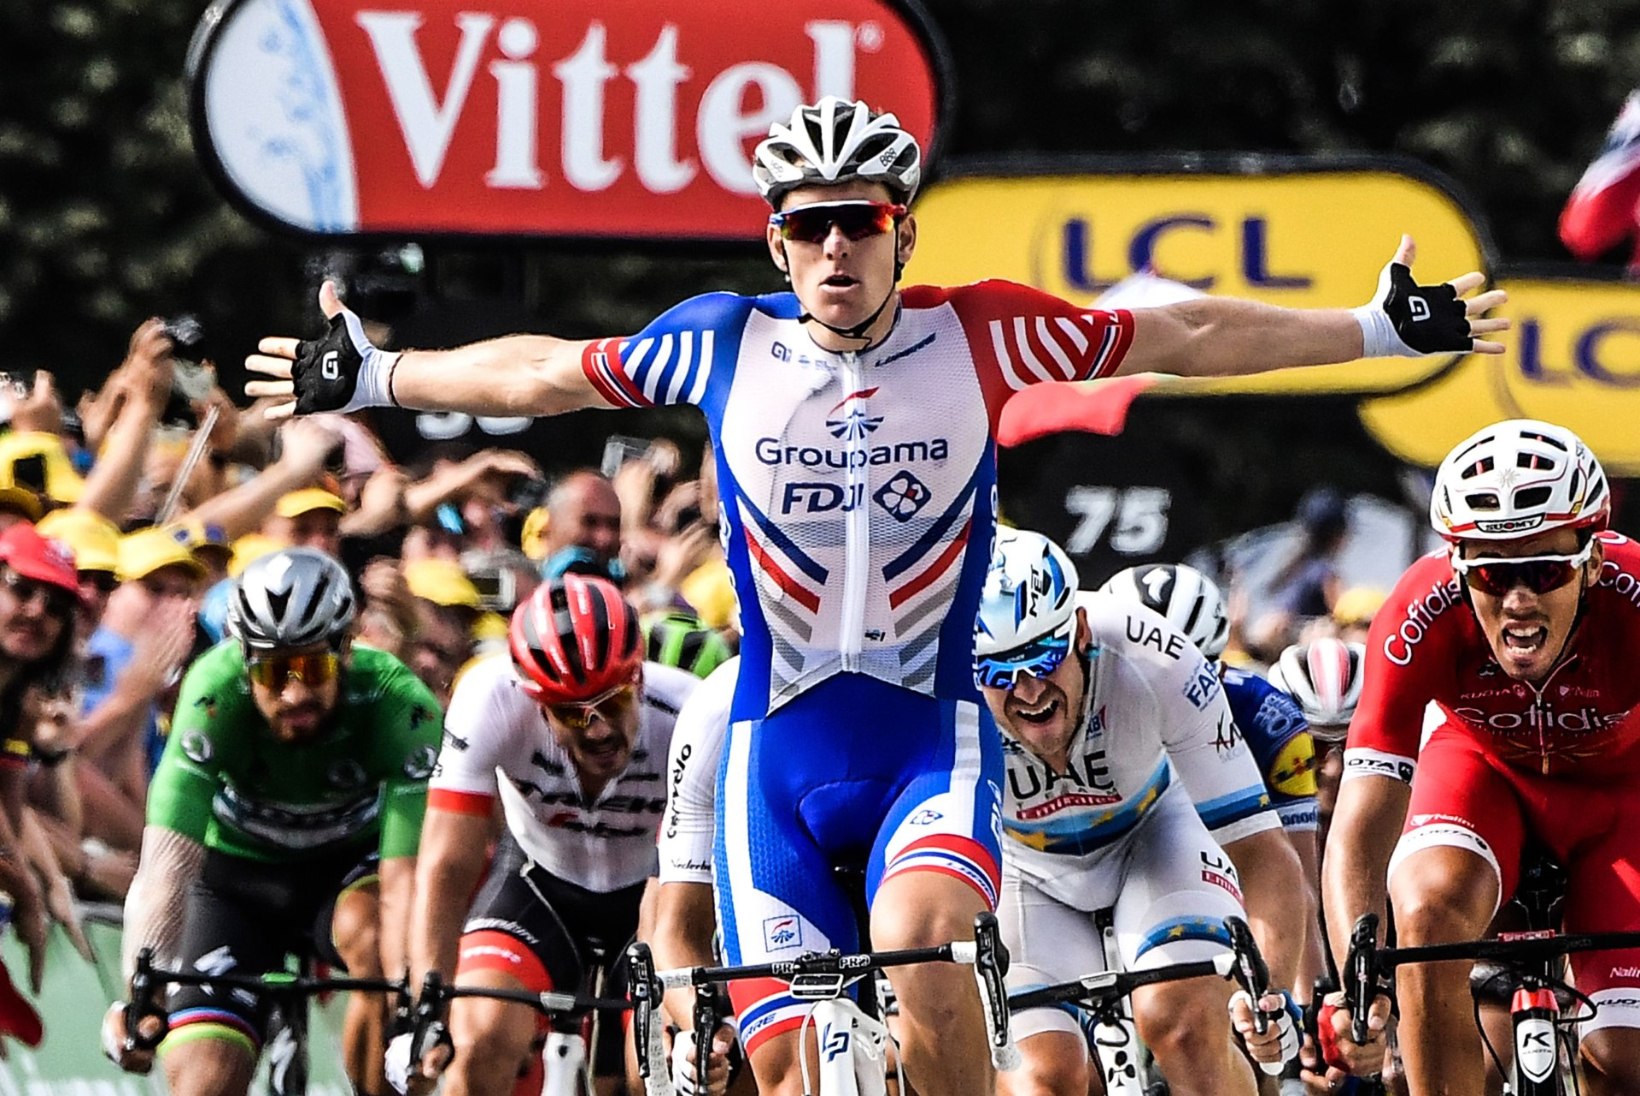 NII SEE JUHTUS | Sport 25.07: Jürgen Zopp veerandfinaalis, Tour de France naases korraks siledale maastikule